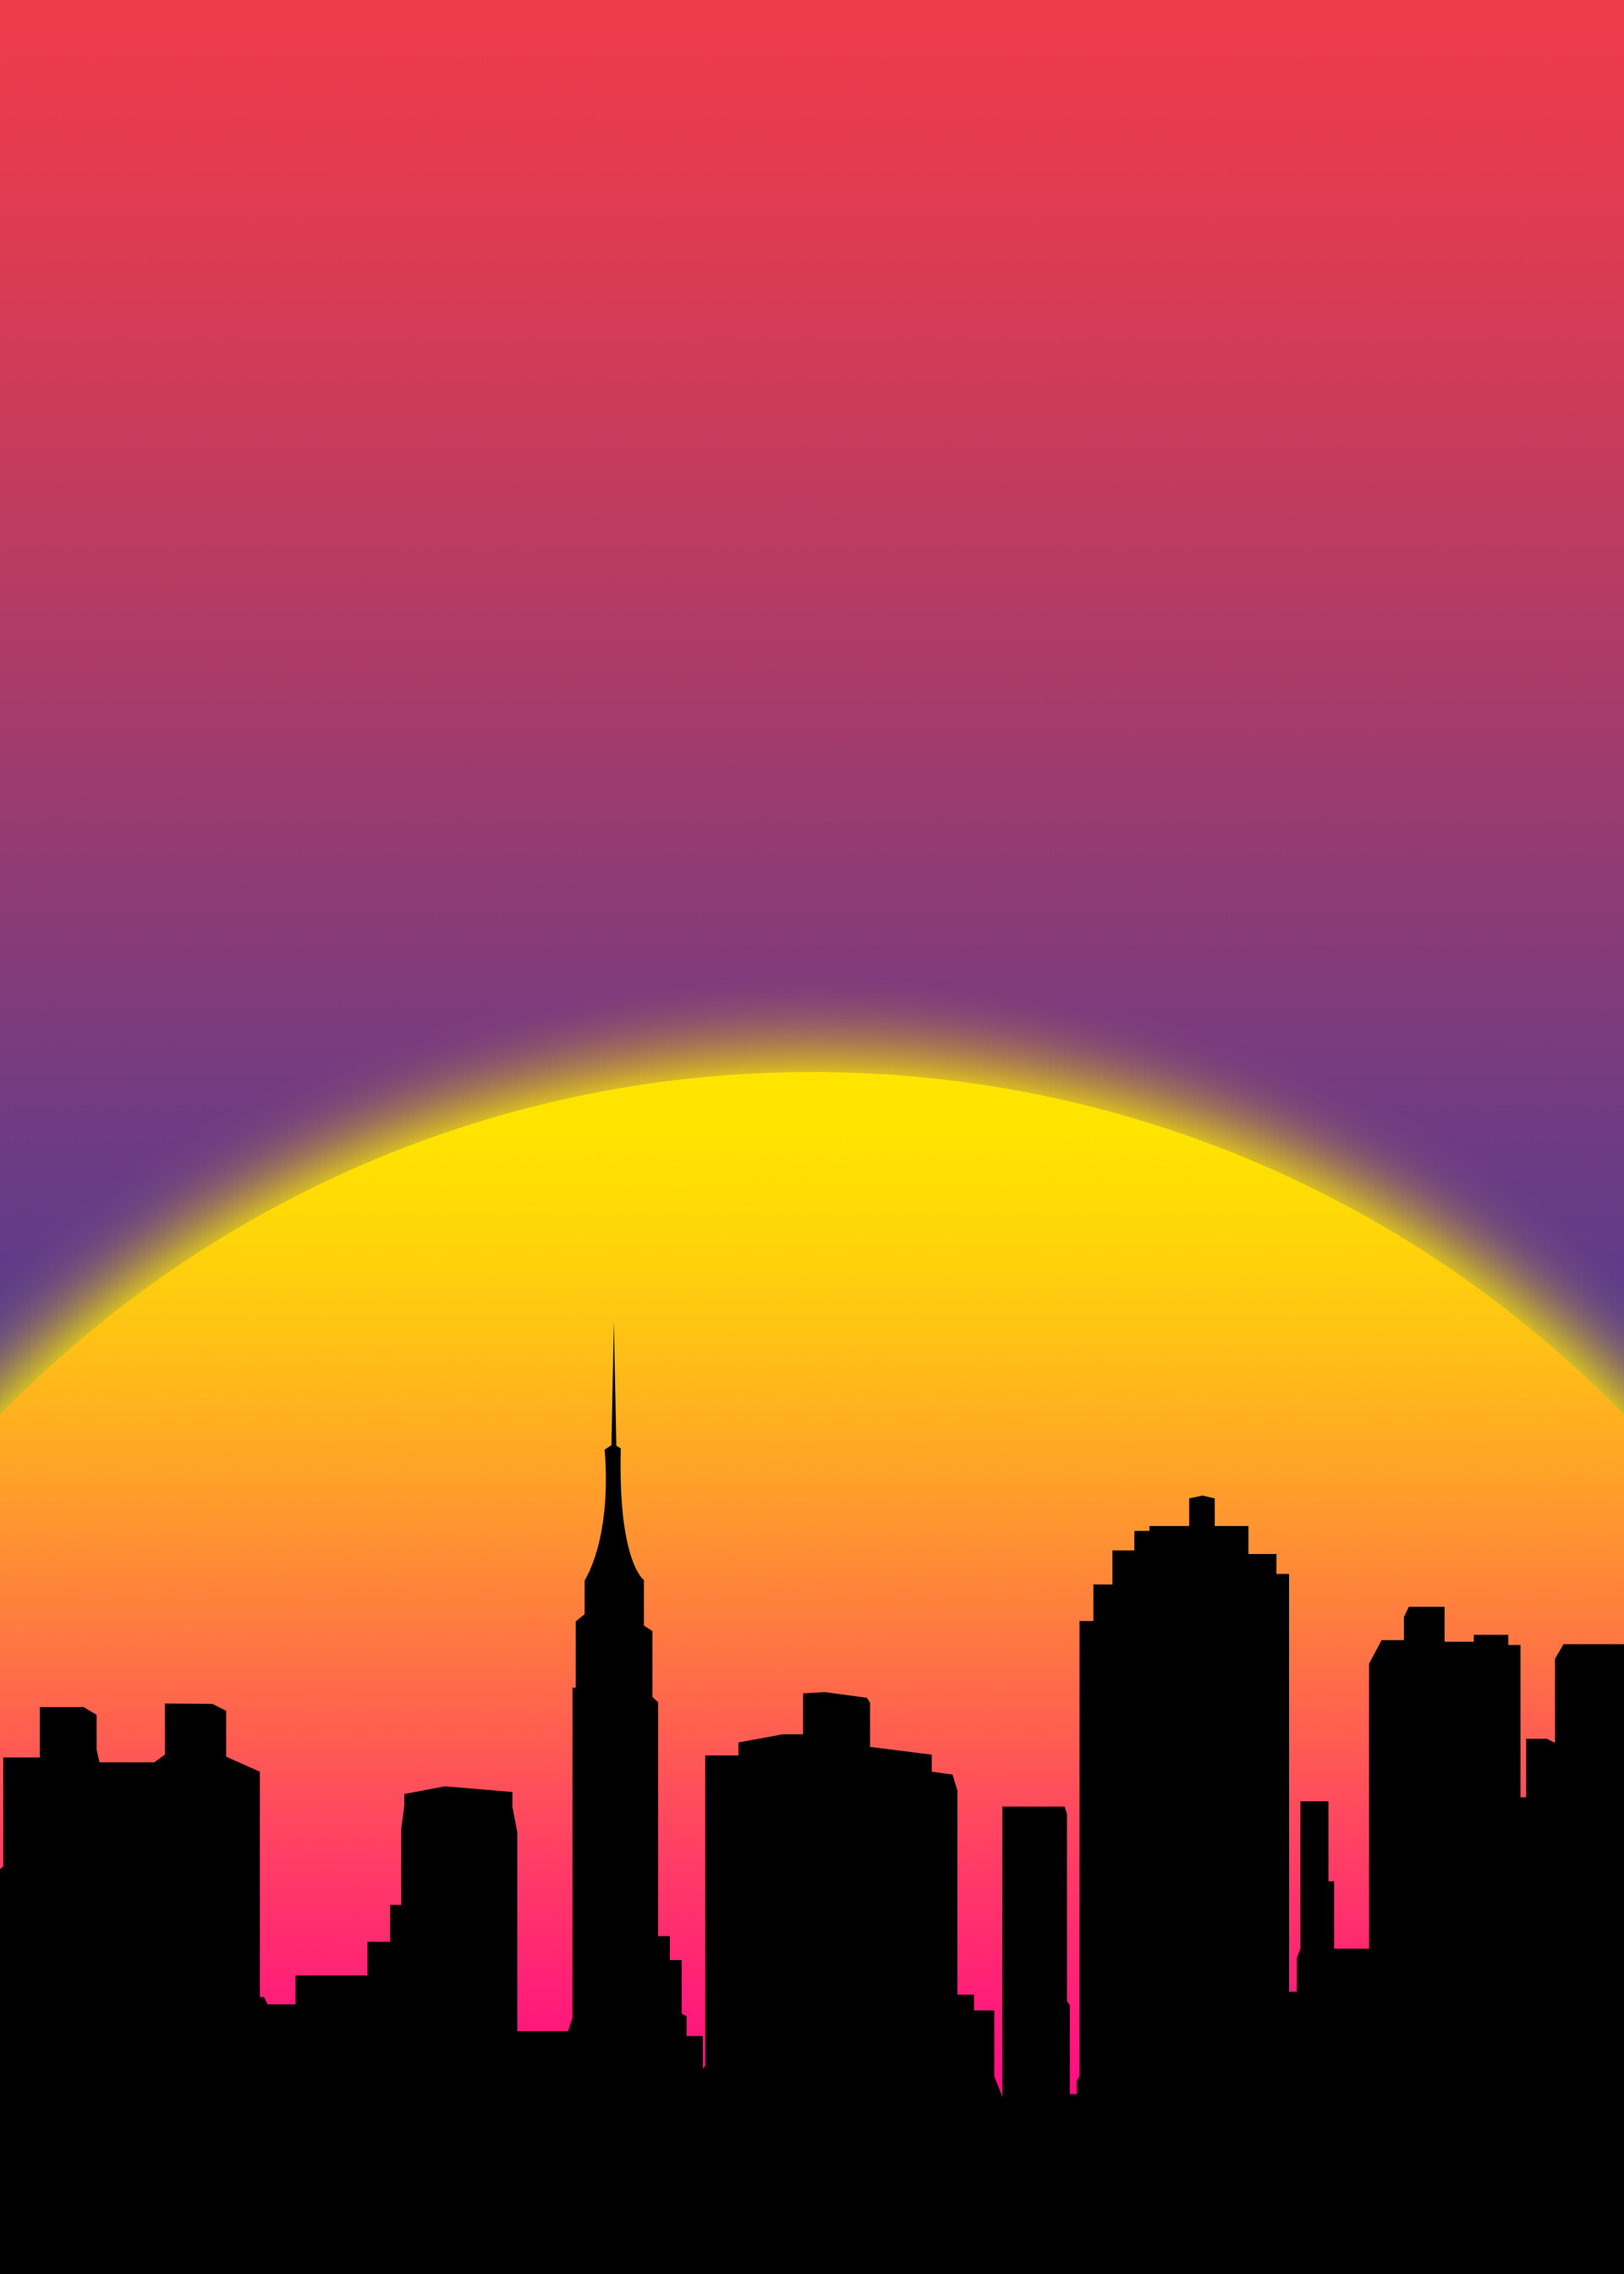 Retro Style City Purple Background